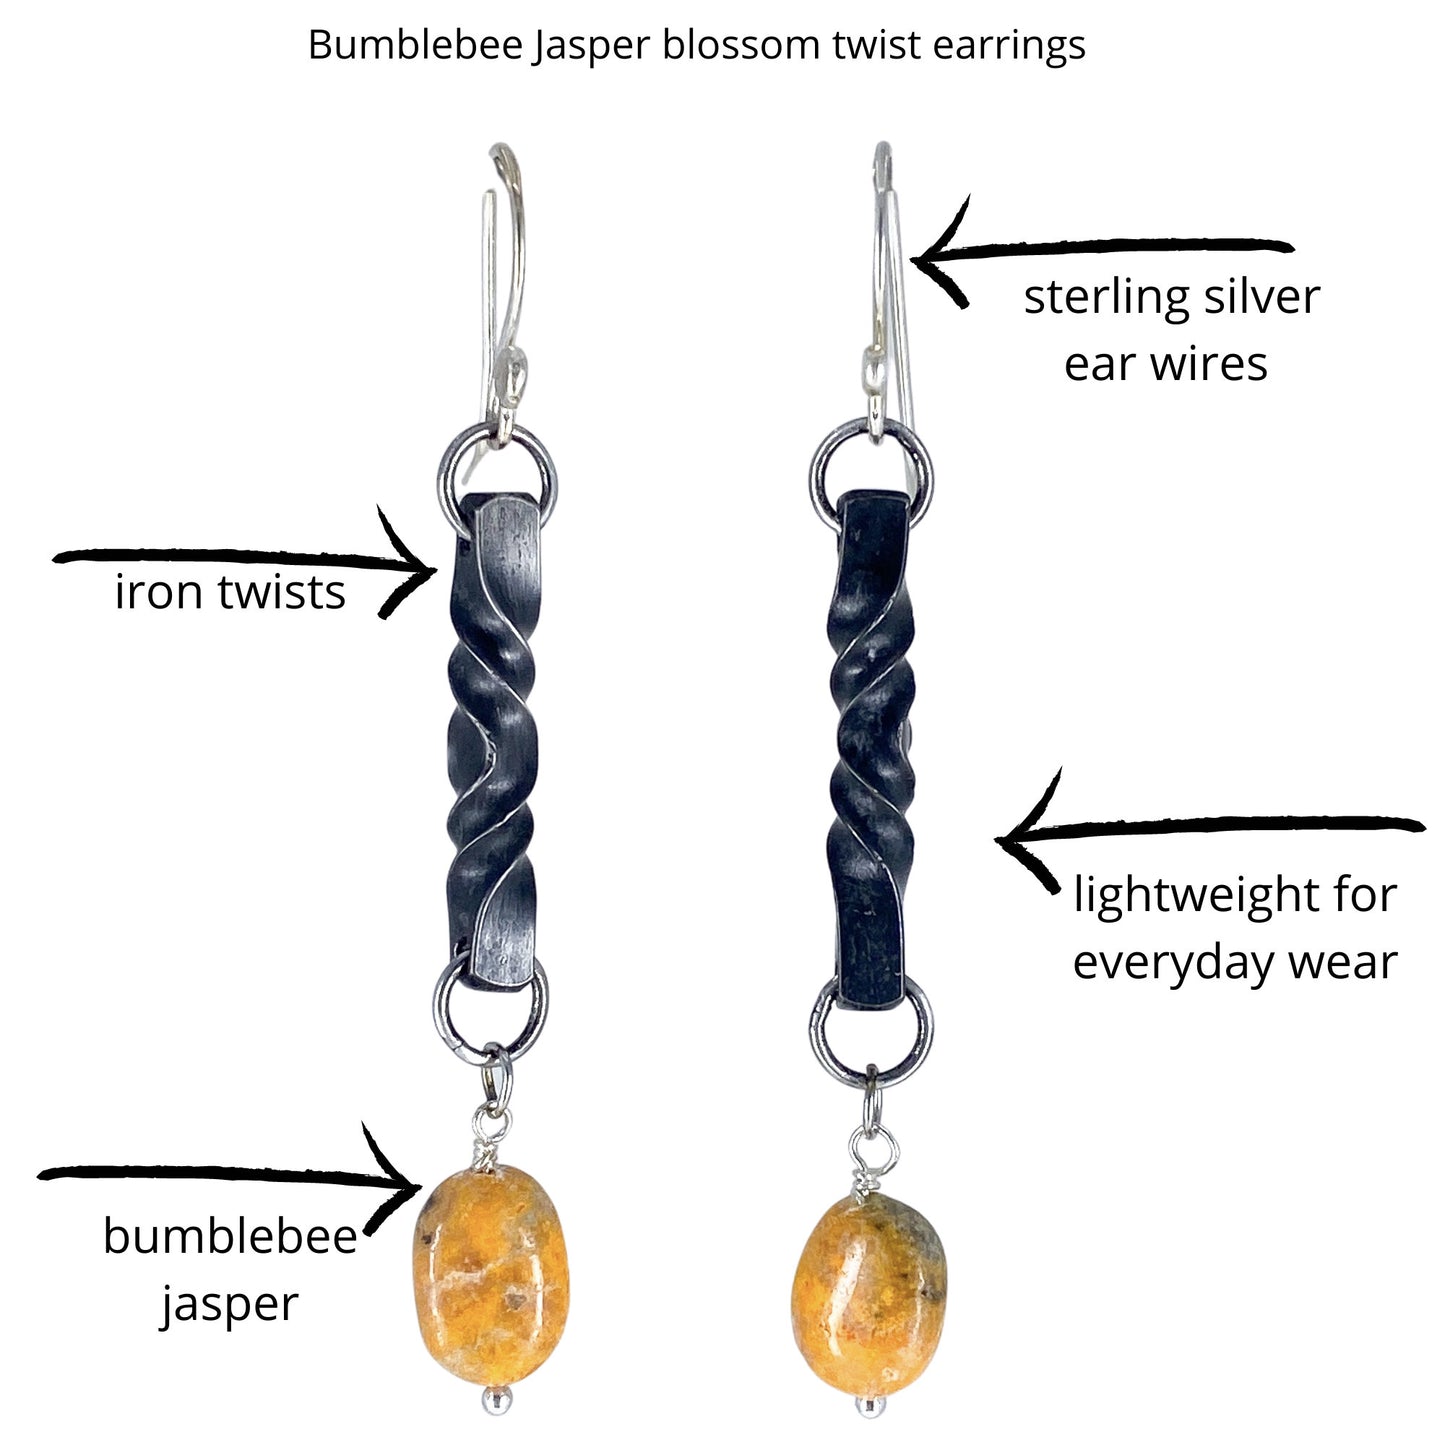 iron and bumblebee jasper earrings, 6th anniversary gift for wife, iron twist earrings and jasper necklace, iron anniversary gift for her